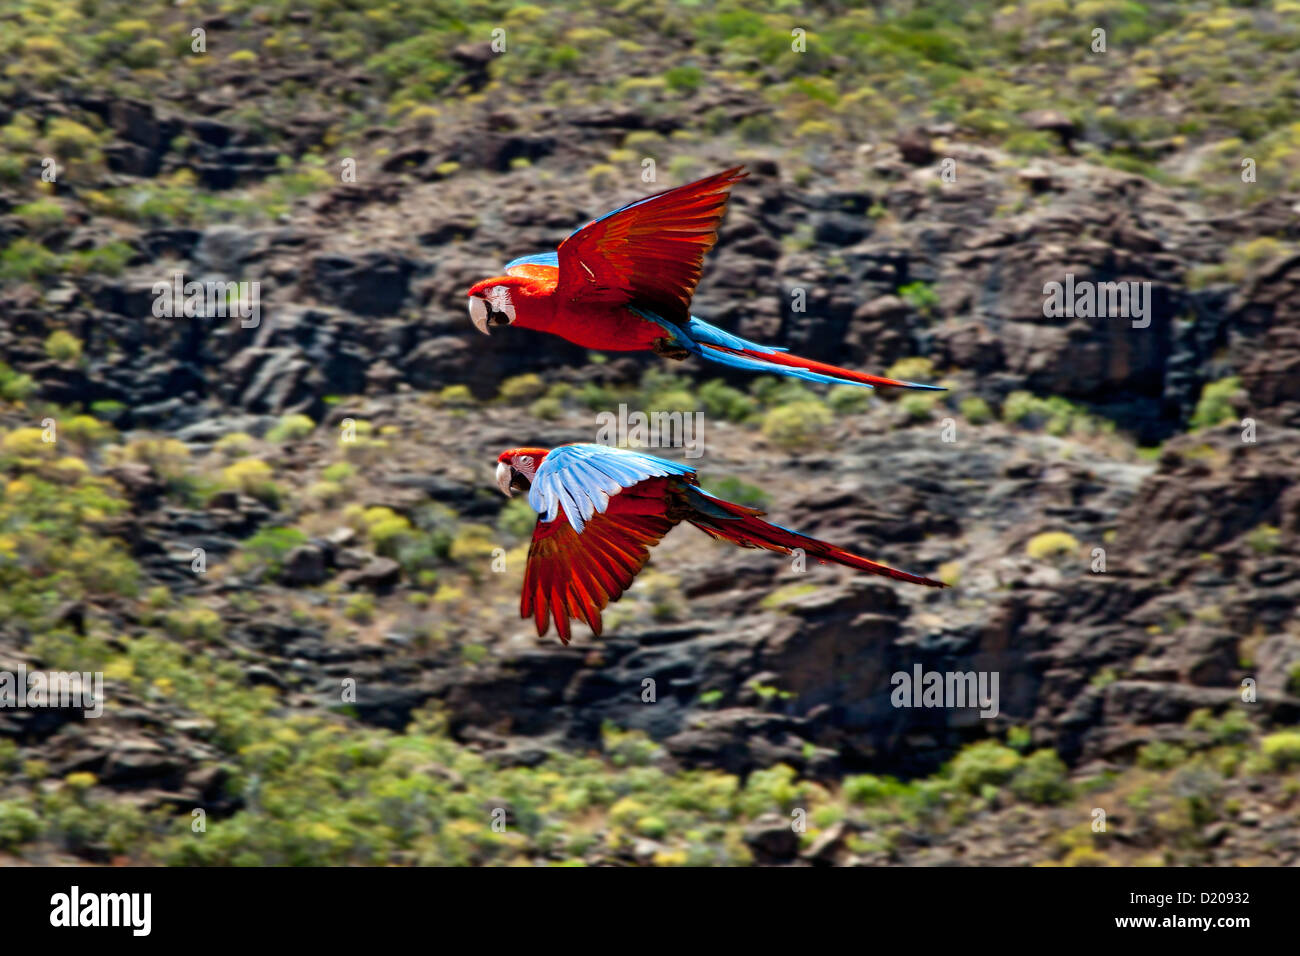 Parrots during a bird show, Palmitos Park, Maspalomas, Gran Canaria, Canary Islands, Spain, Europe Stock Photo